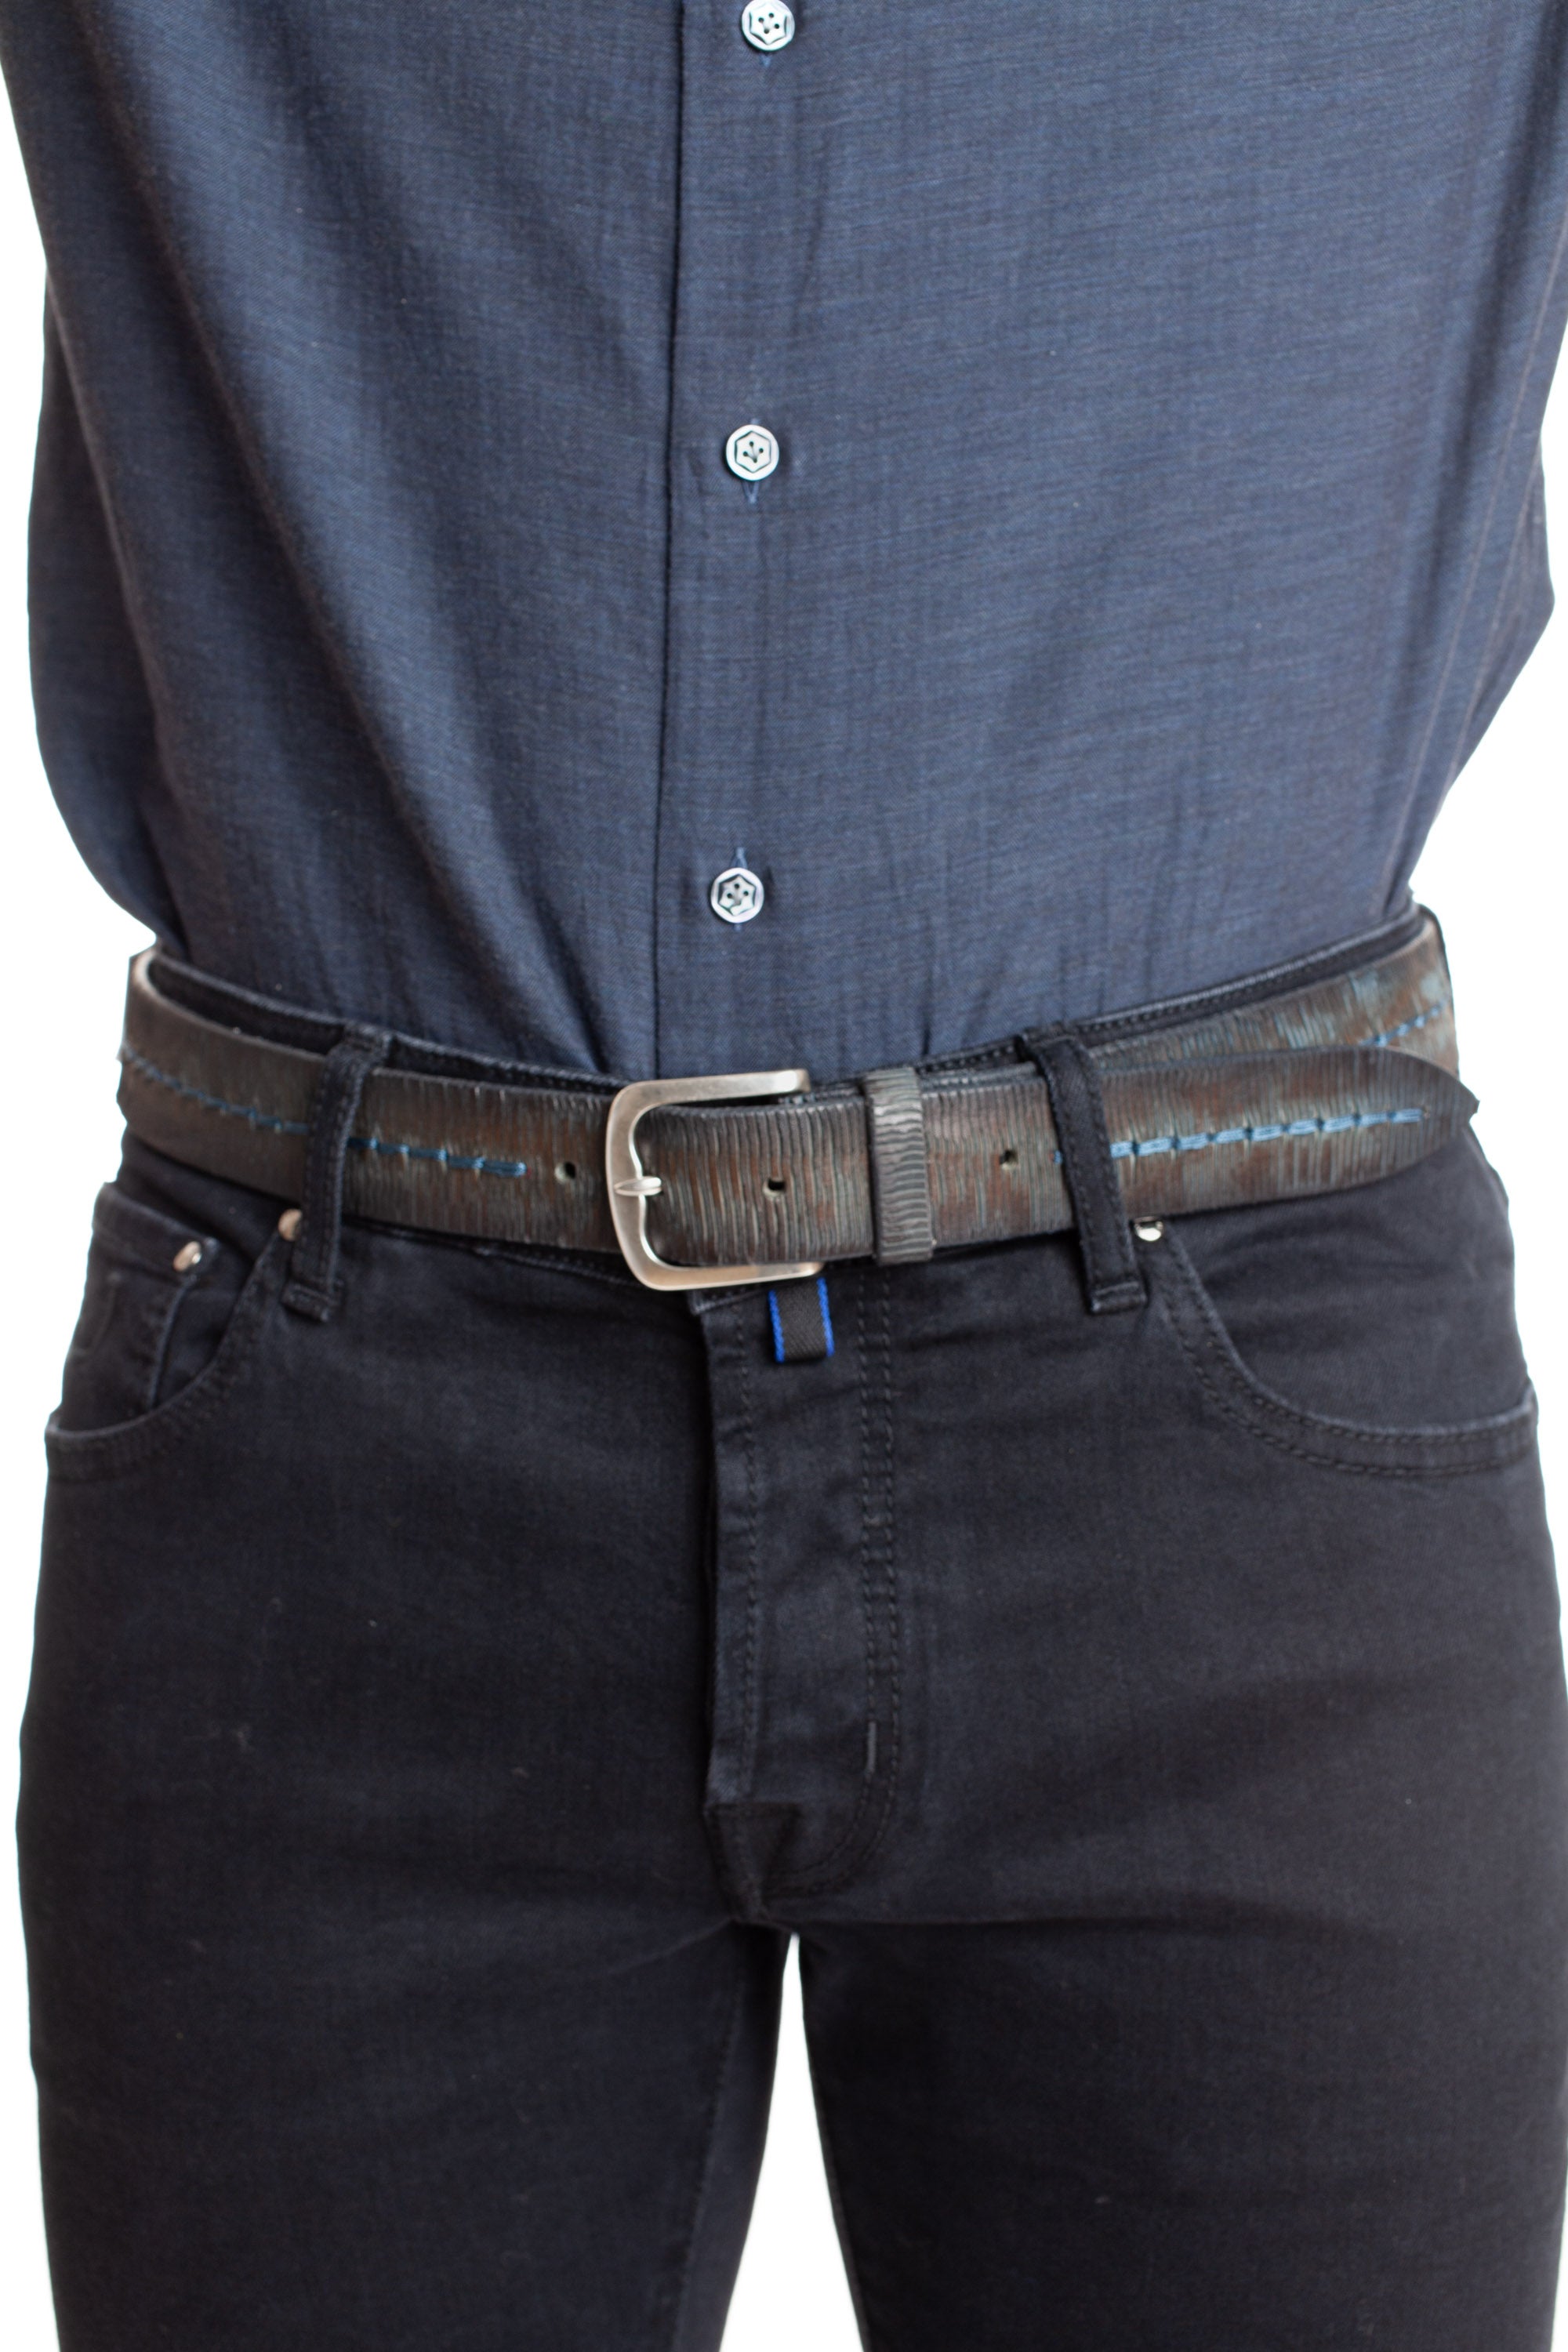 Lamellar leather belt with stitching